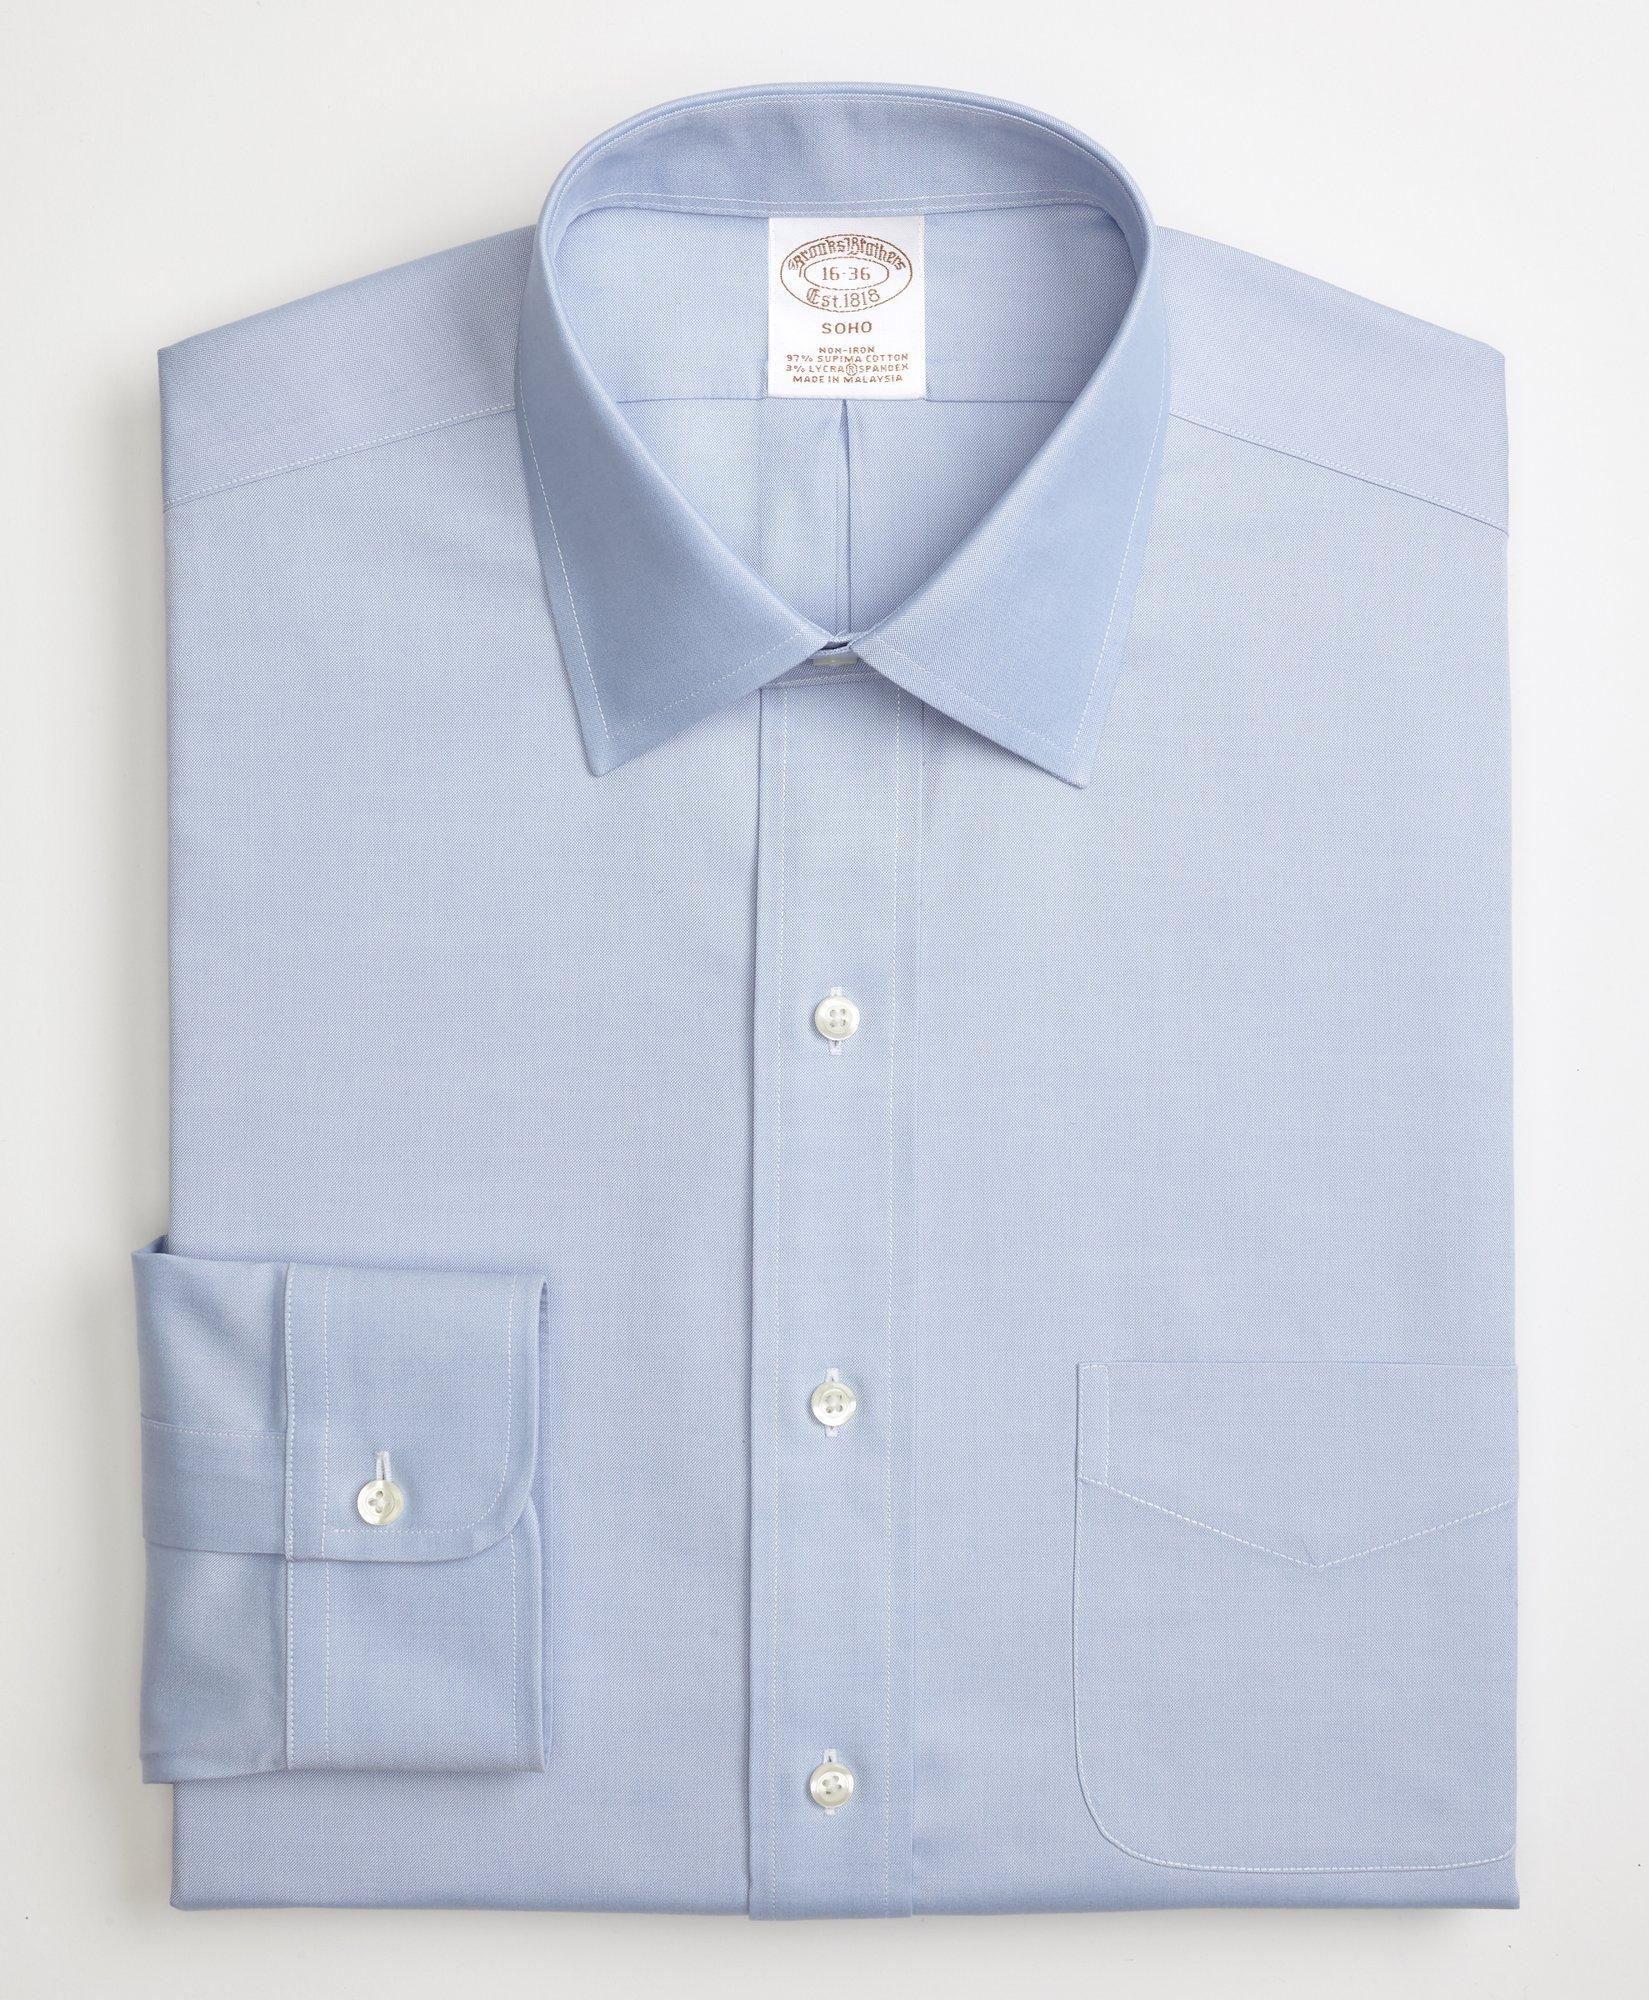 onderbreken Vleien Tien jaar Stretch Soho Extra-Slim Fit Dress Shirt, Non-Iron Pinpoint Spread Collar